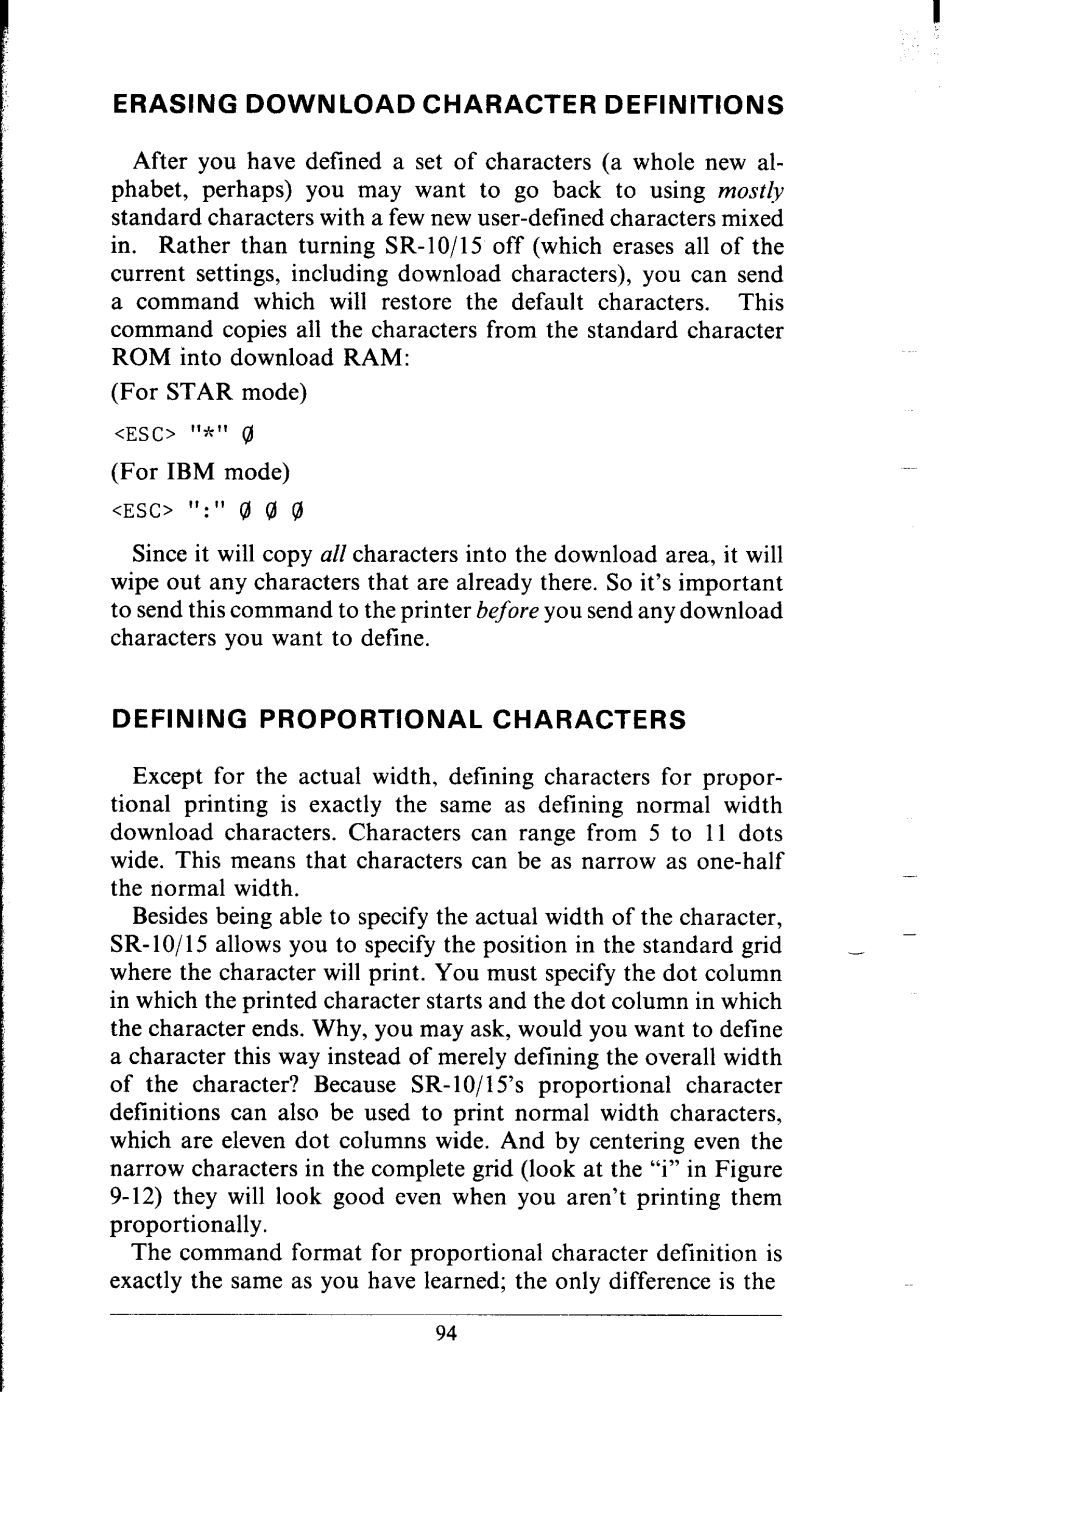 Star Micronics SR-10/I5 user manual Erasing Download Character Definitions, Defining, Proportional, Characters, ESC I0 0 